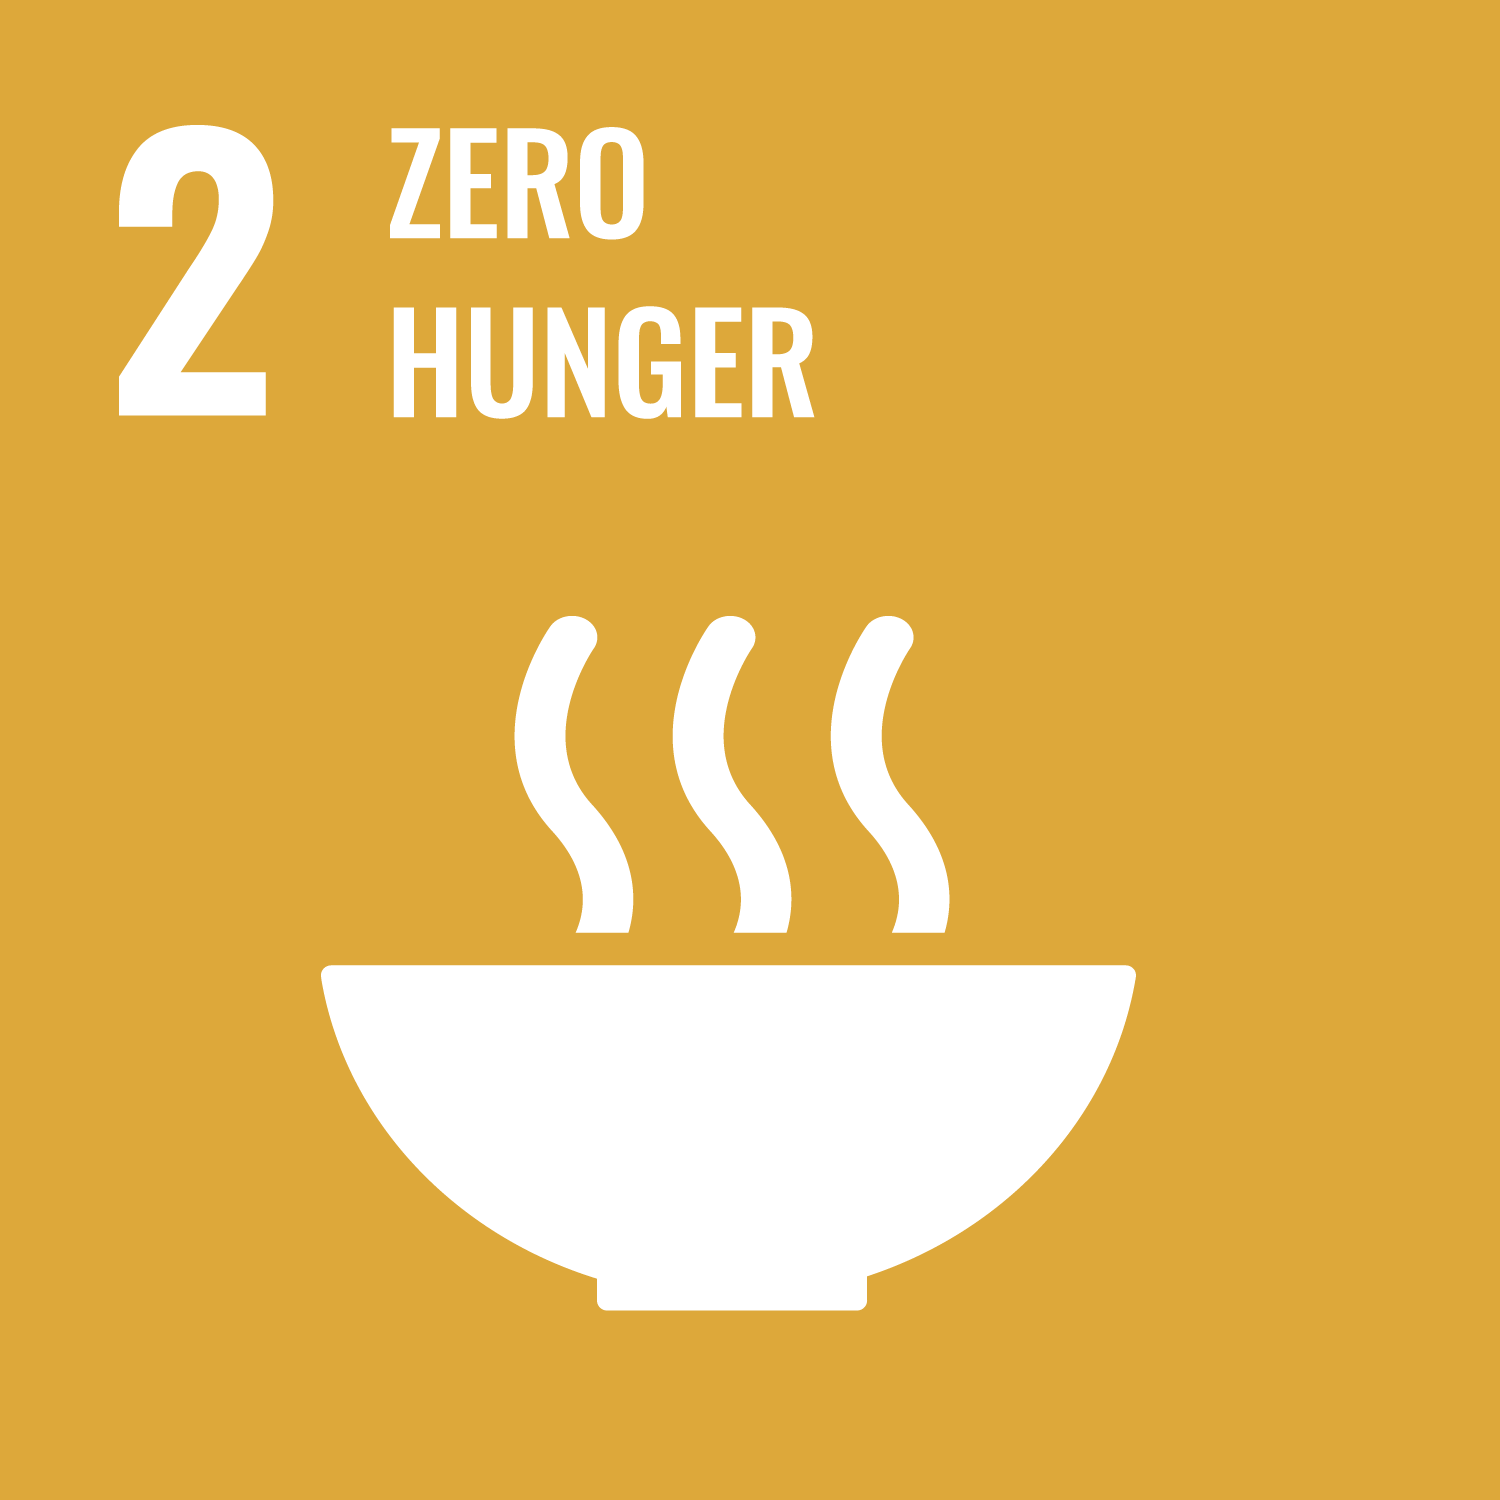 Sustainable Development Goals (SDG2) Zero Hunger